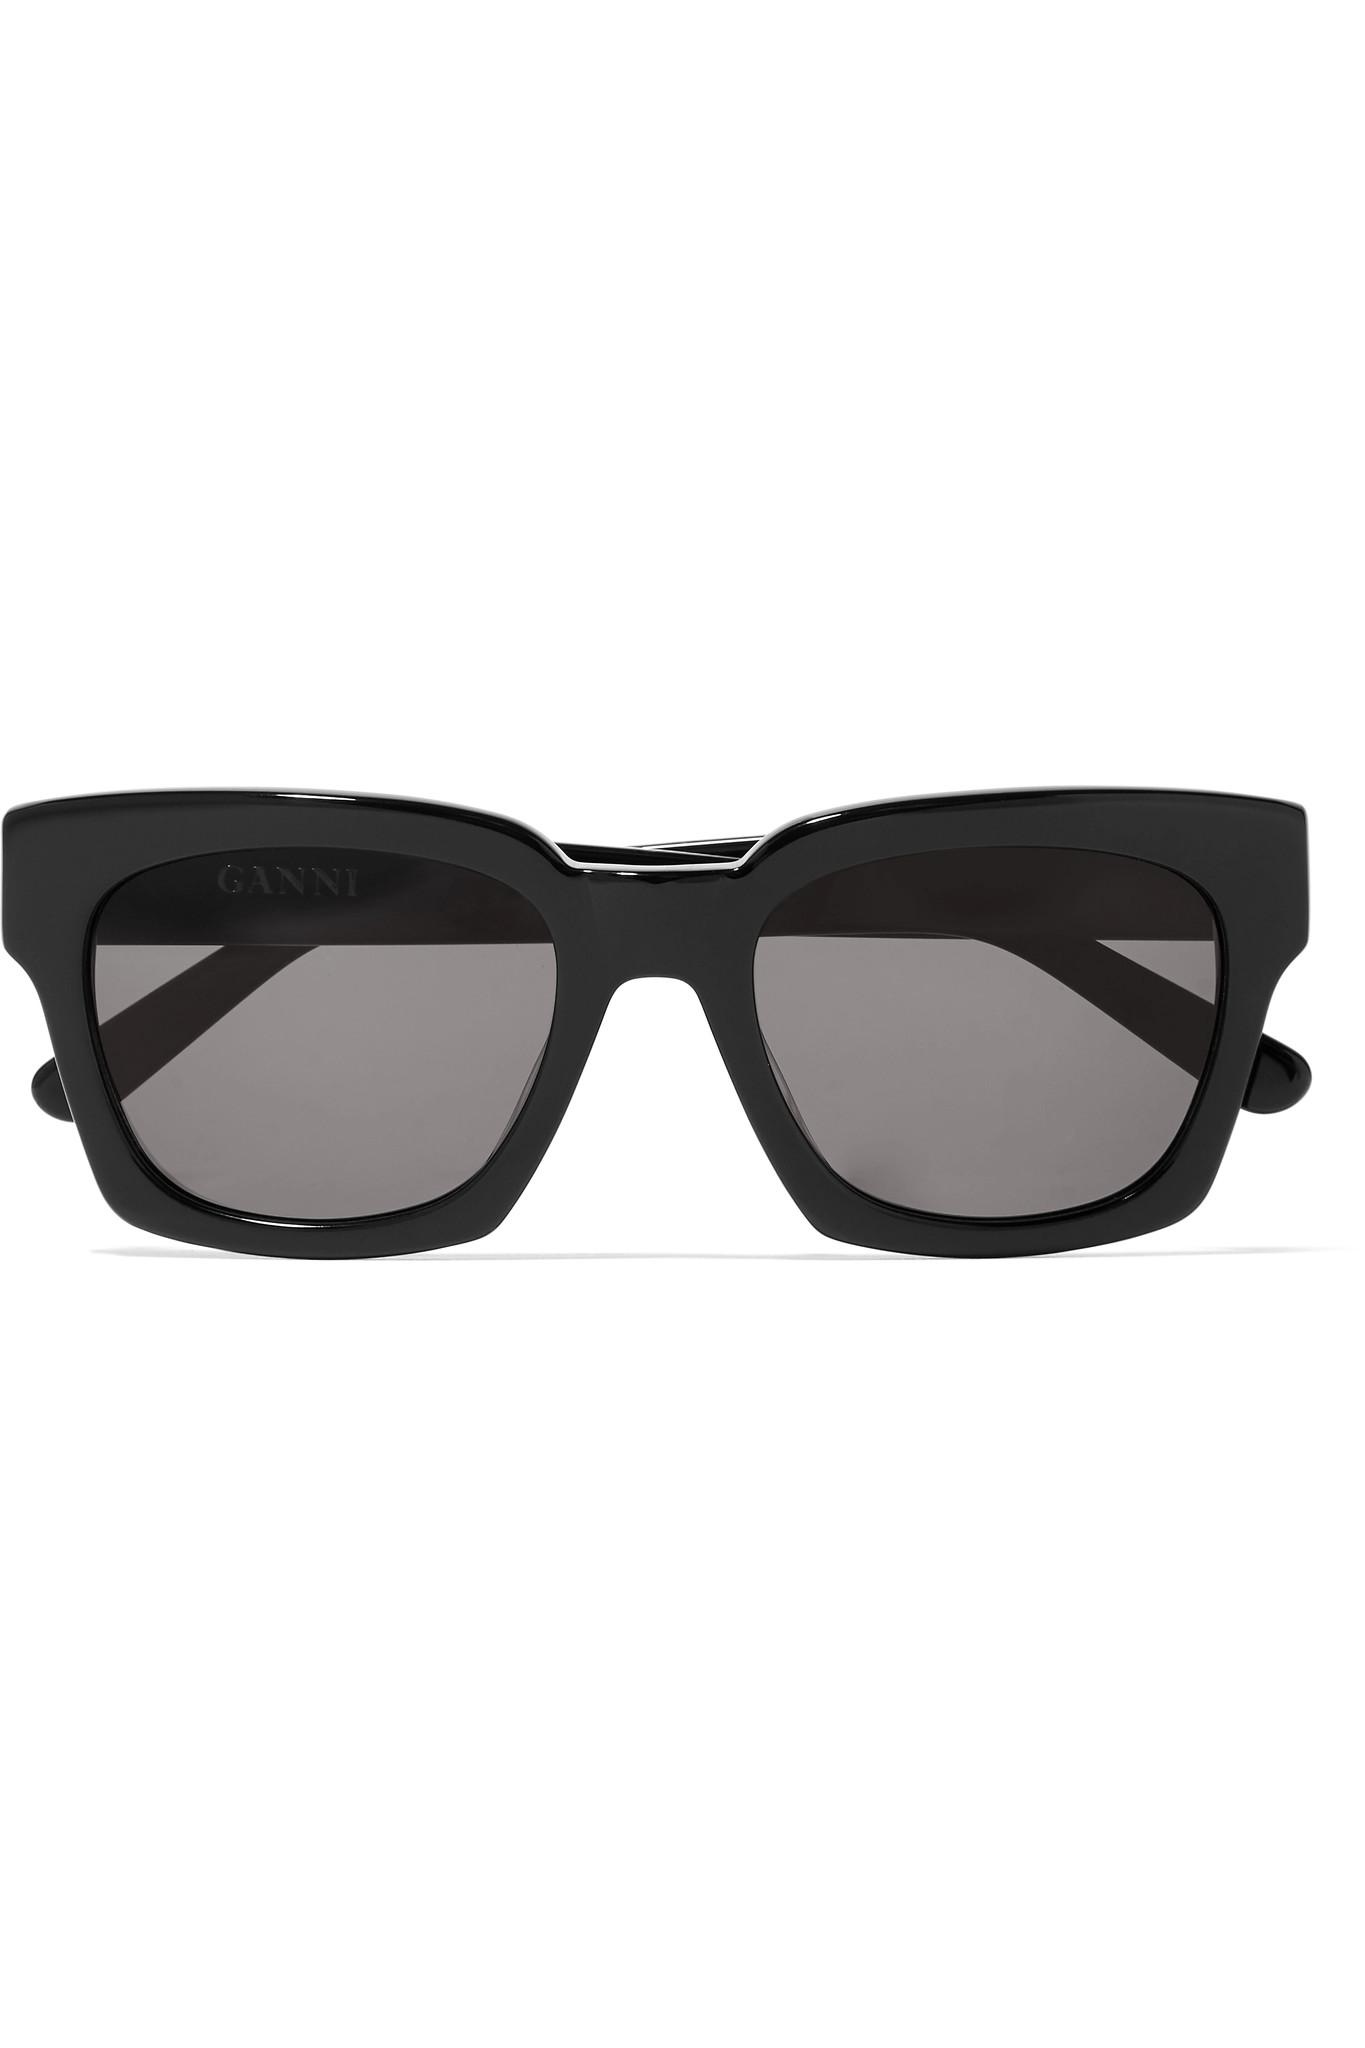 Ganni Alice Square-frame Acetate Sunglasses in Black - Lyst